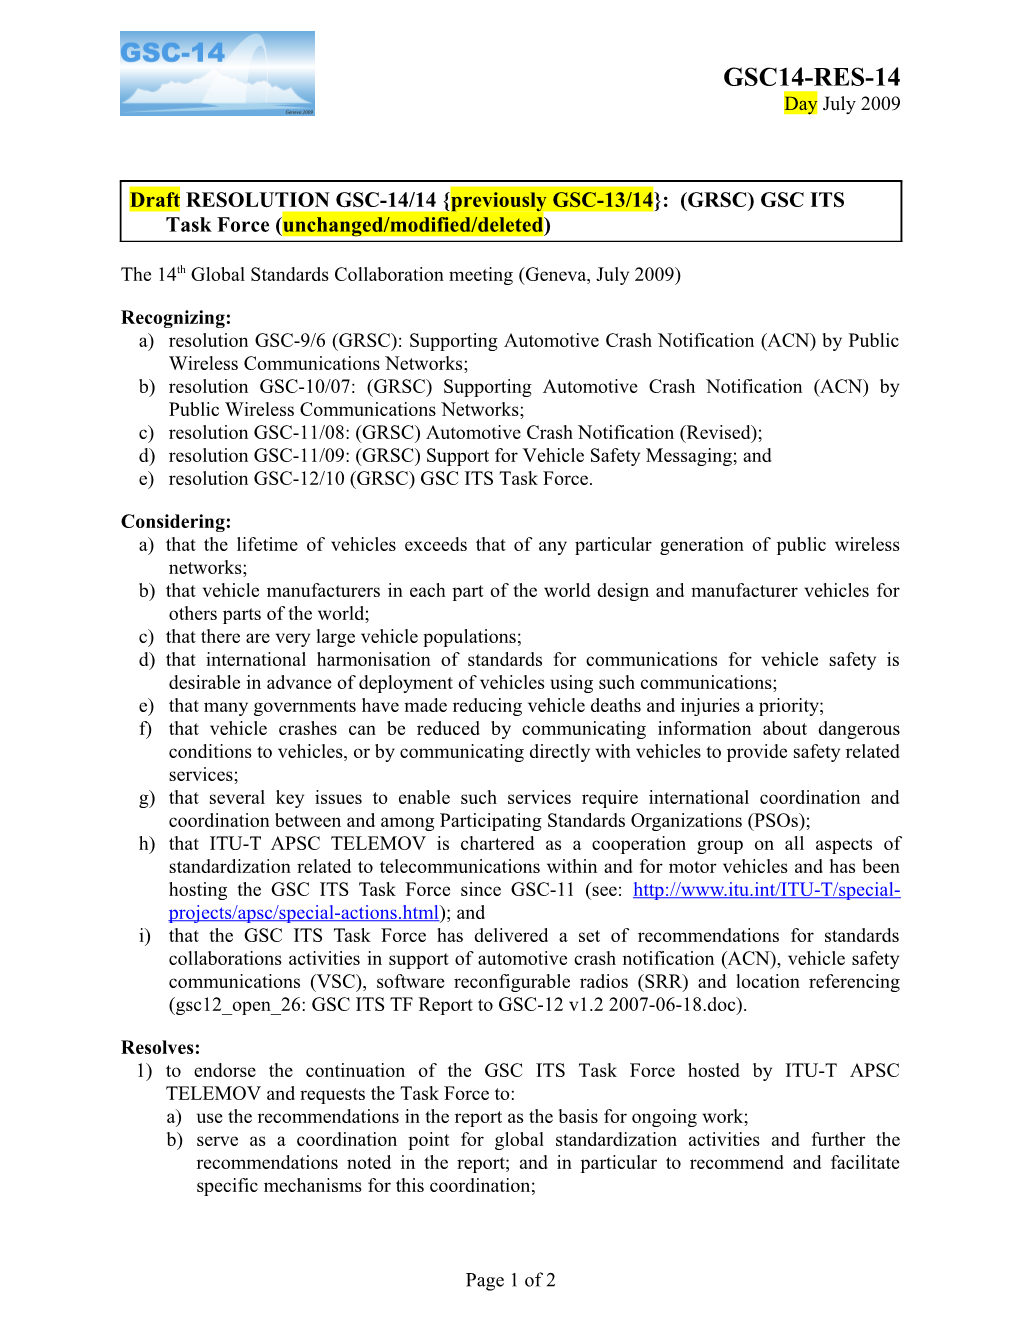 RESOLUTION GSC-11/08: (GRSC) Automotive Crash Notification (Revised)